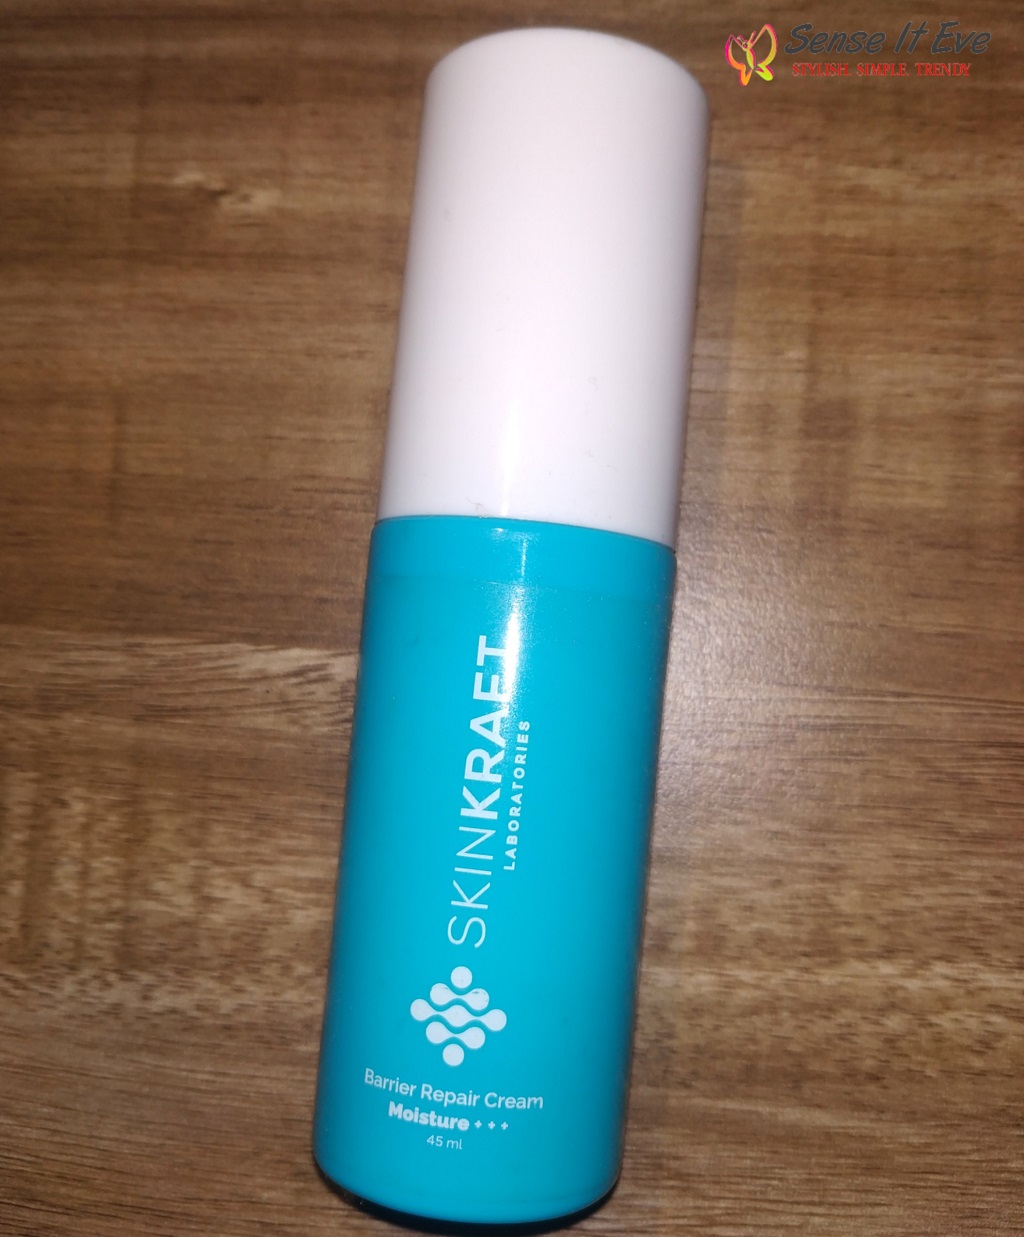 Skinkraft Barrier Repair Cream Packaging Sense It Eve Skinkraft Customized Skin Regimen Review